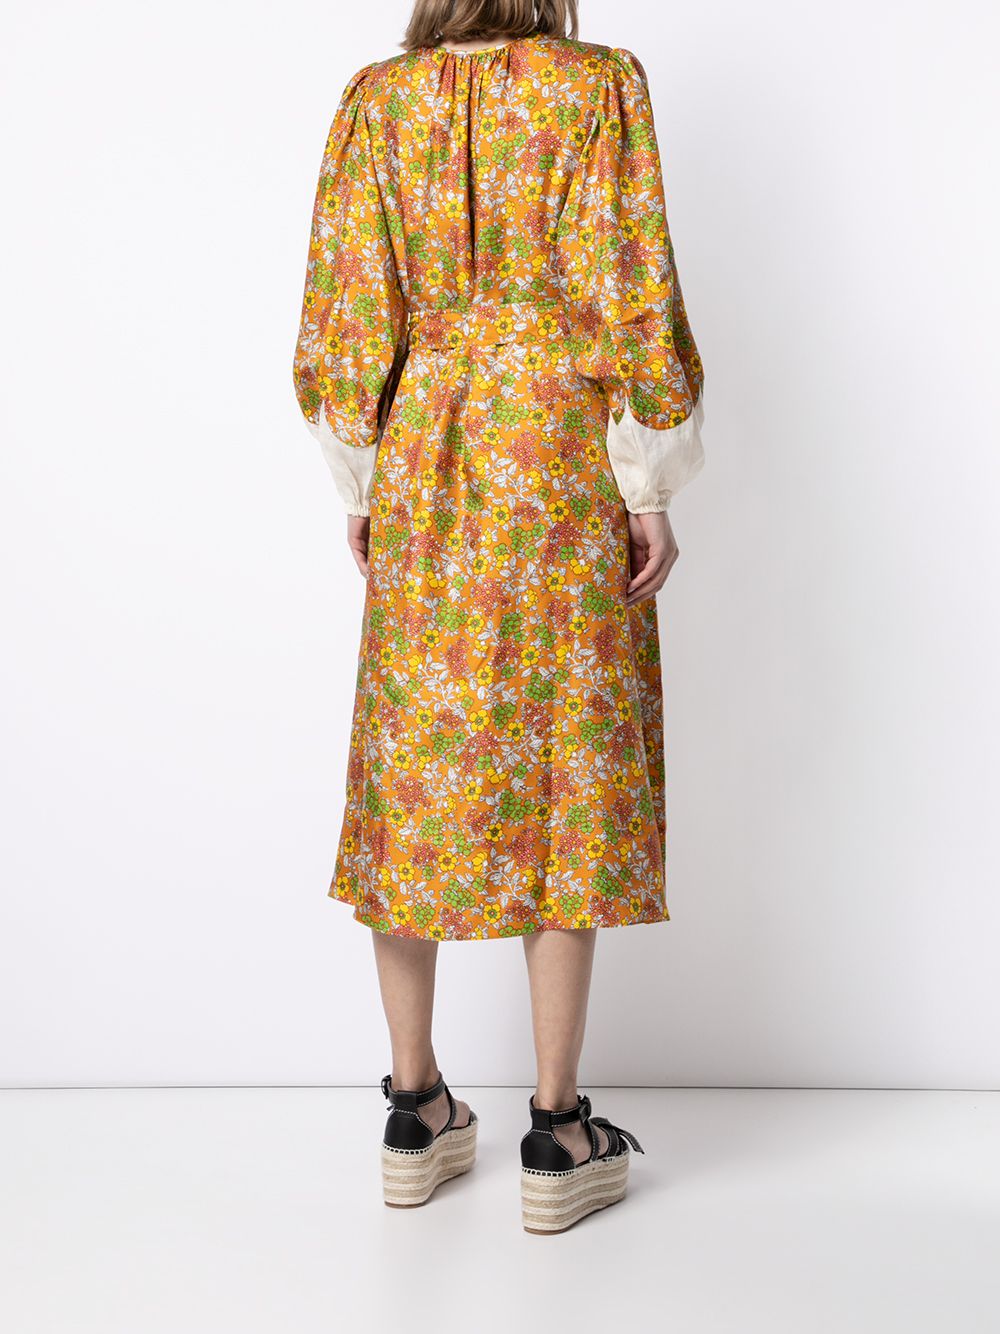 Tory Burch Wallpaper Floral Silk Dress - Farfetch